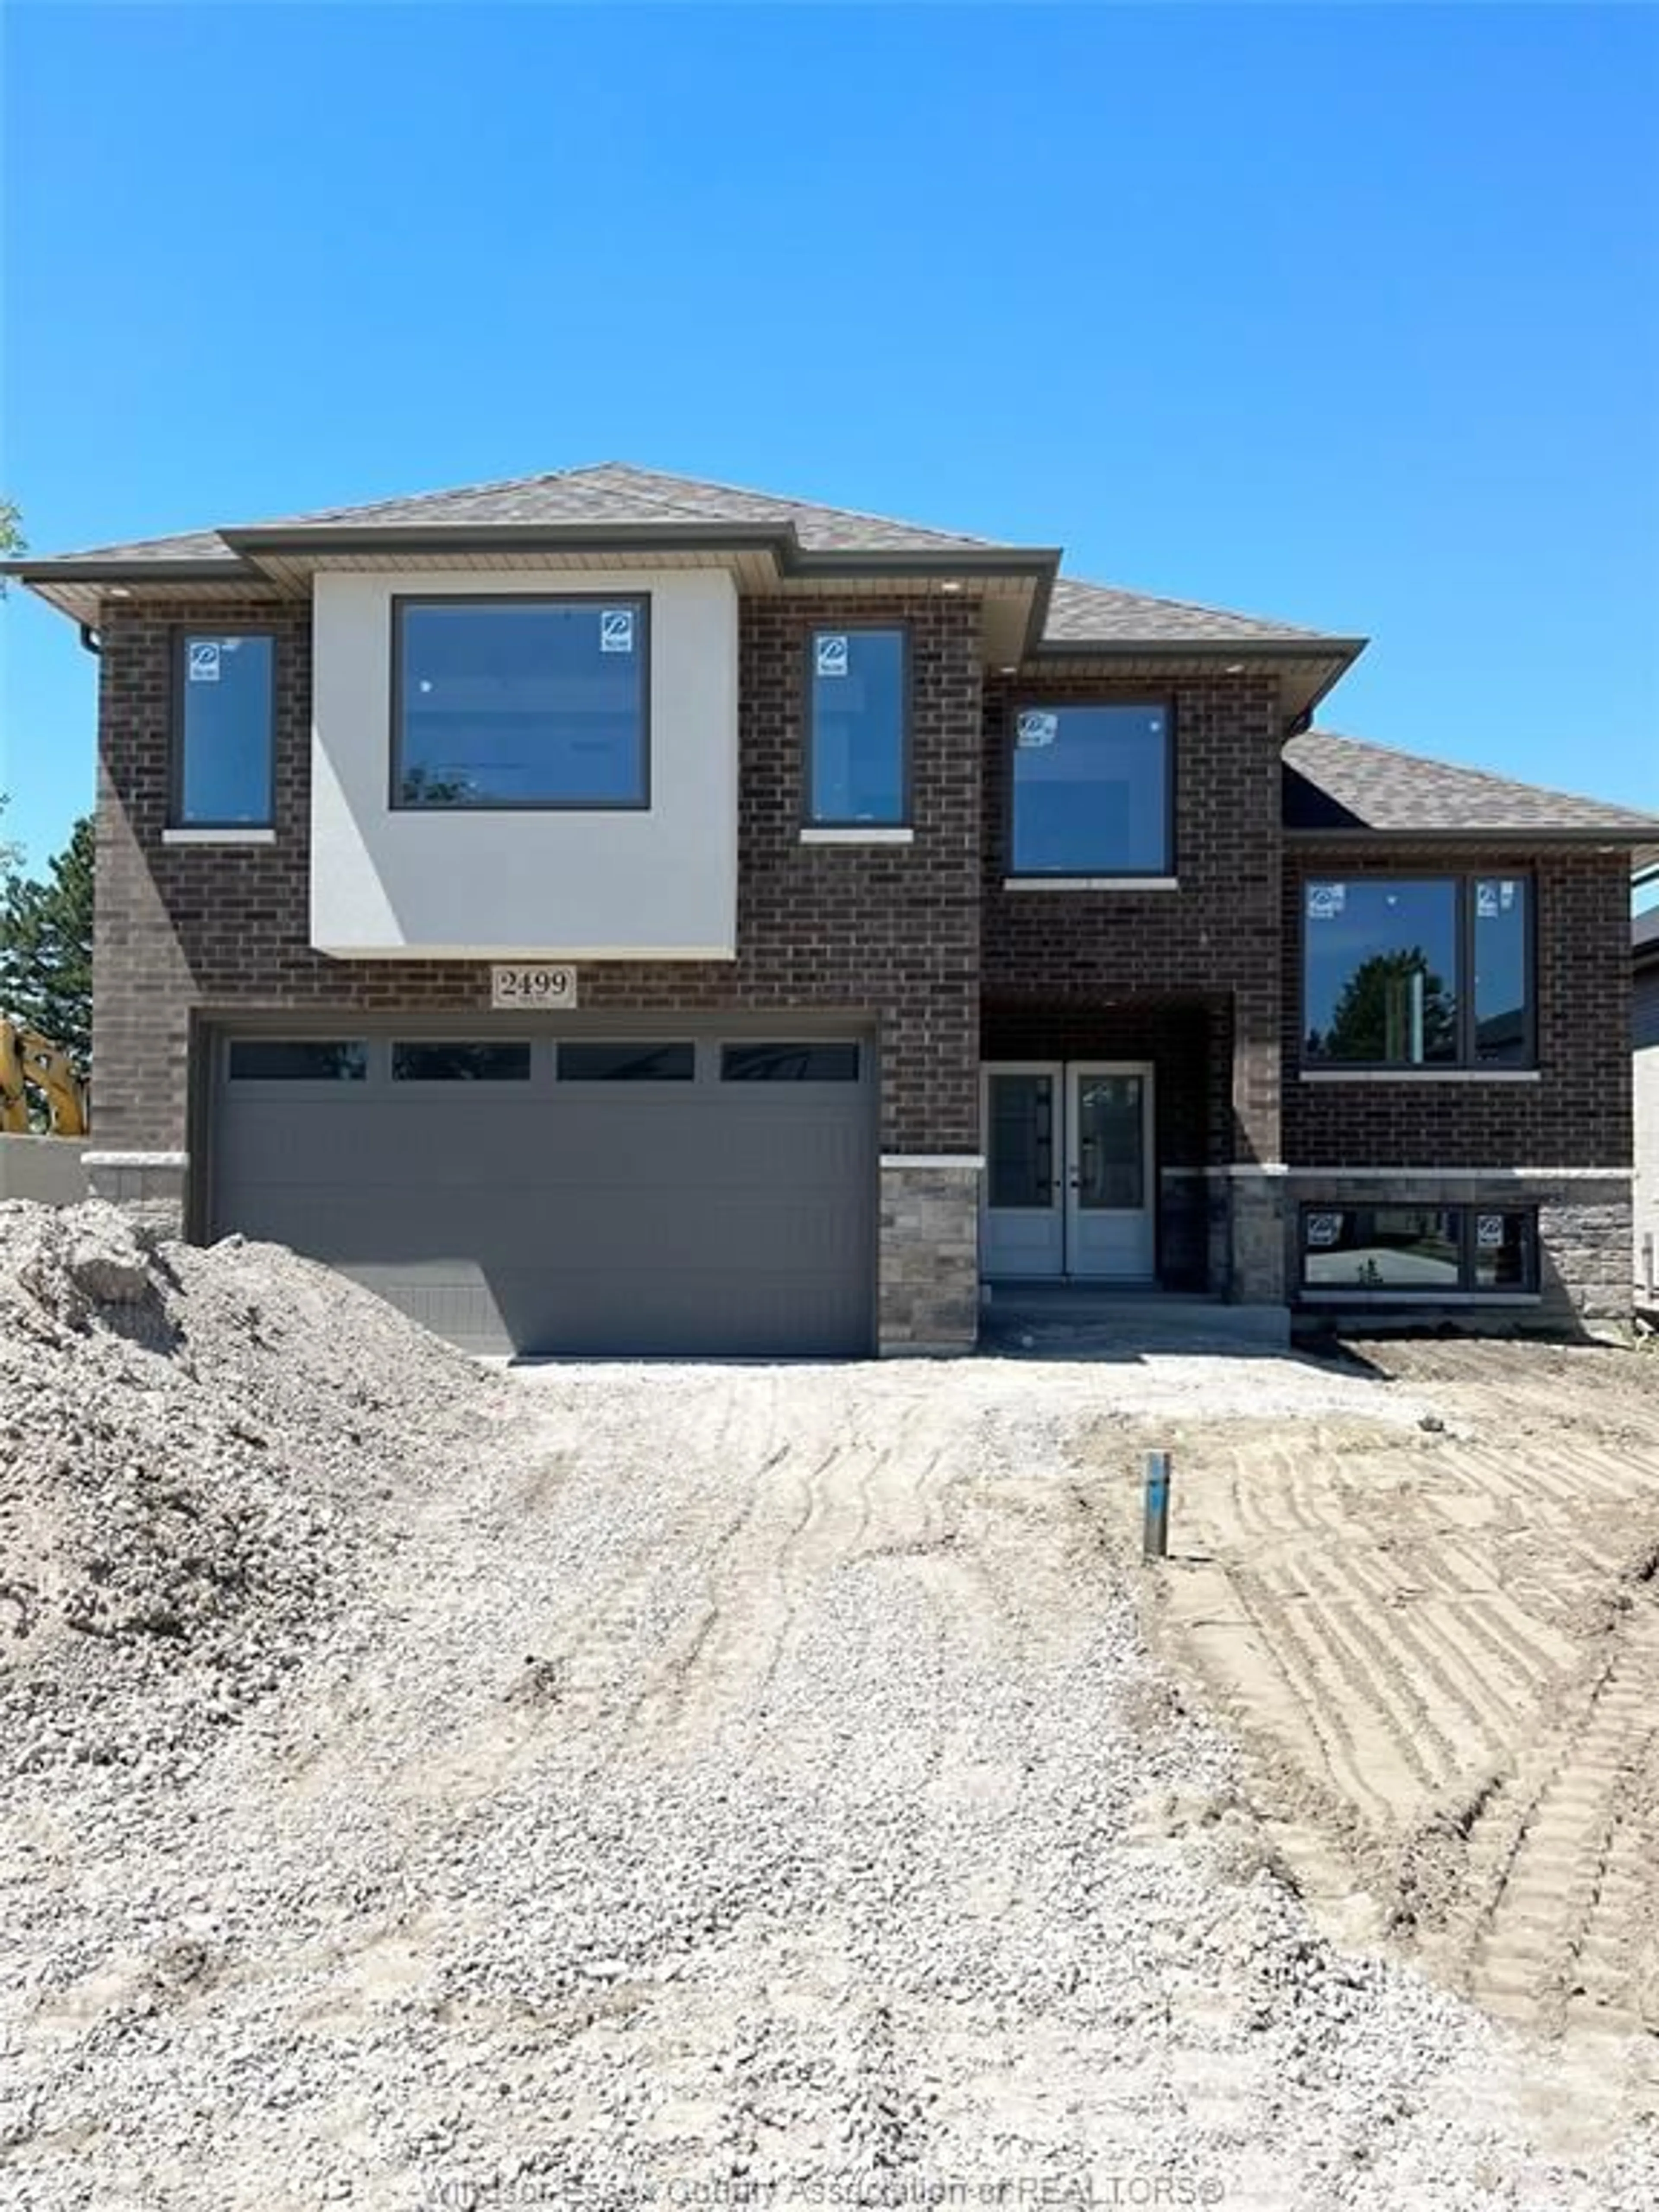 Home with brick exterior material for 2499 ROXBOROUGH, Windsor Ontario N9E 0A9